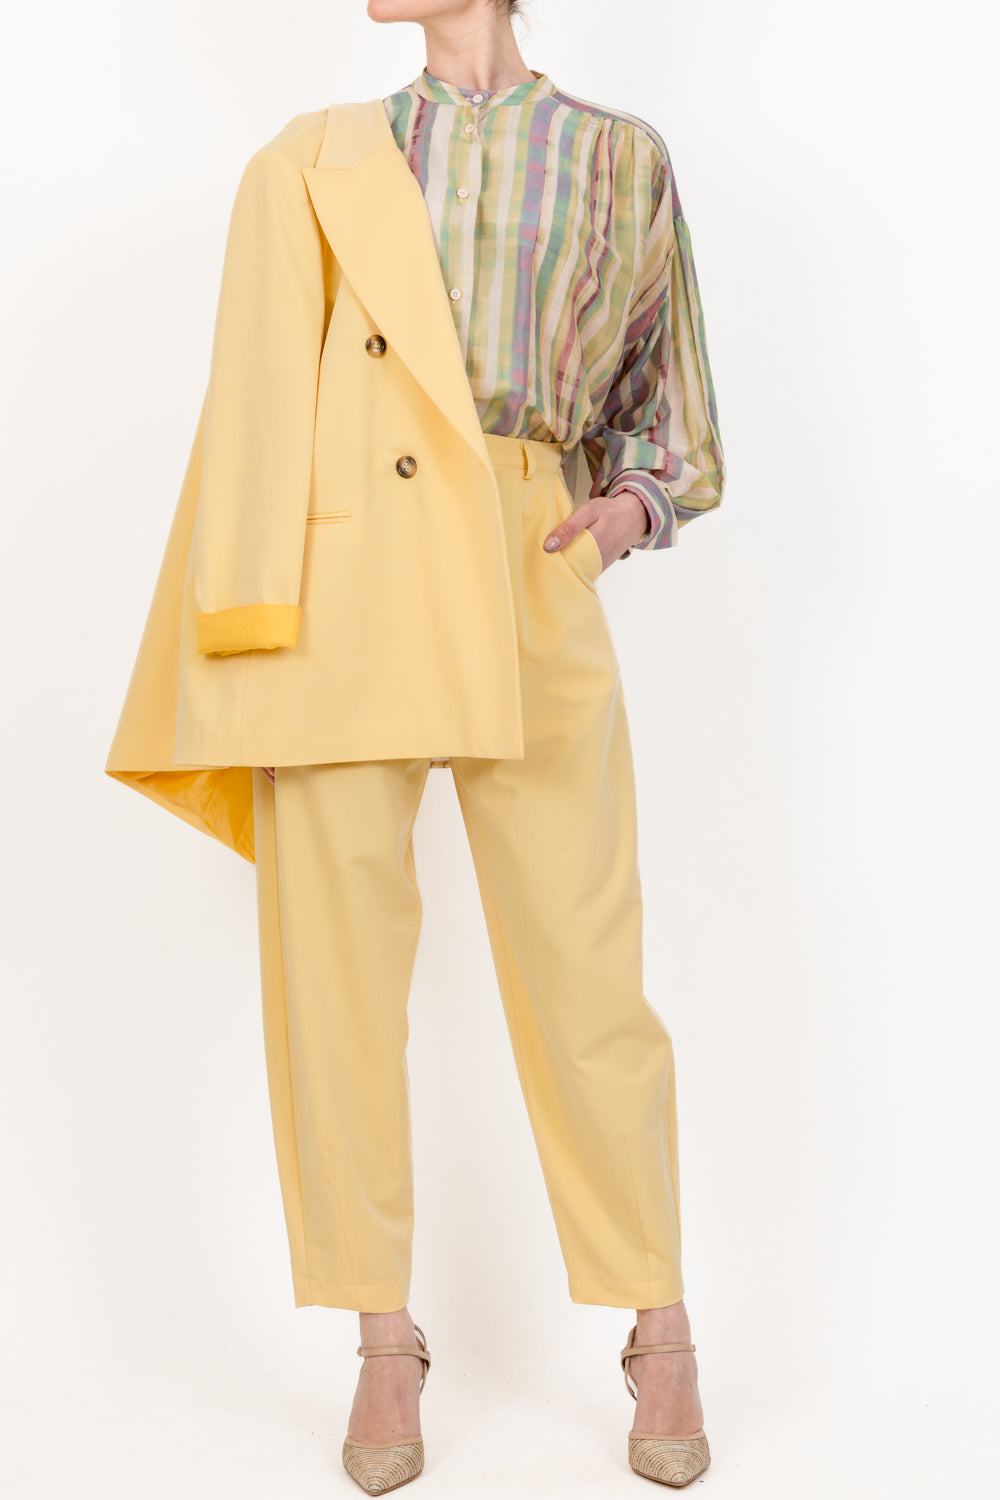 Dixie - Completo giacca doppiopetto pantalone carrot Art. J845J016 / P845J076